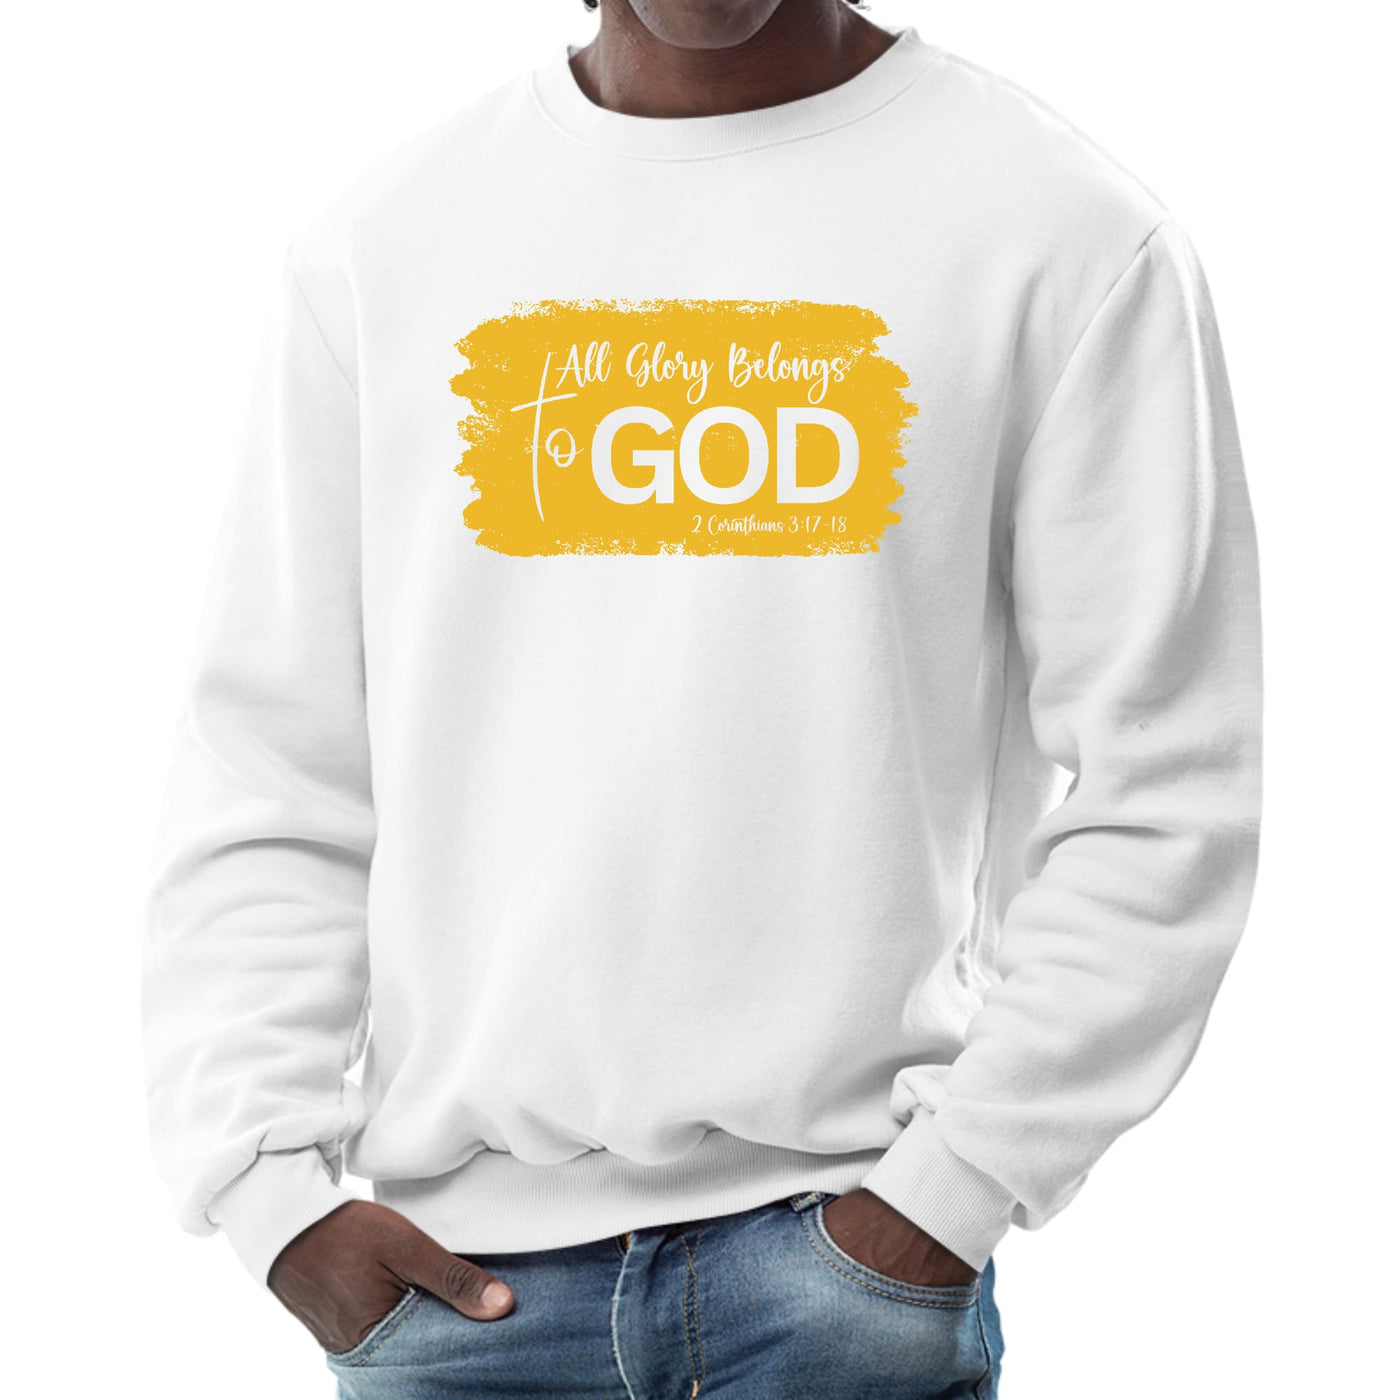 Mens Graphic Sweatshirt All Glory Belongs To God Golden Yellow - Mens